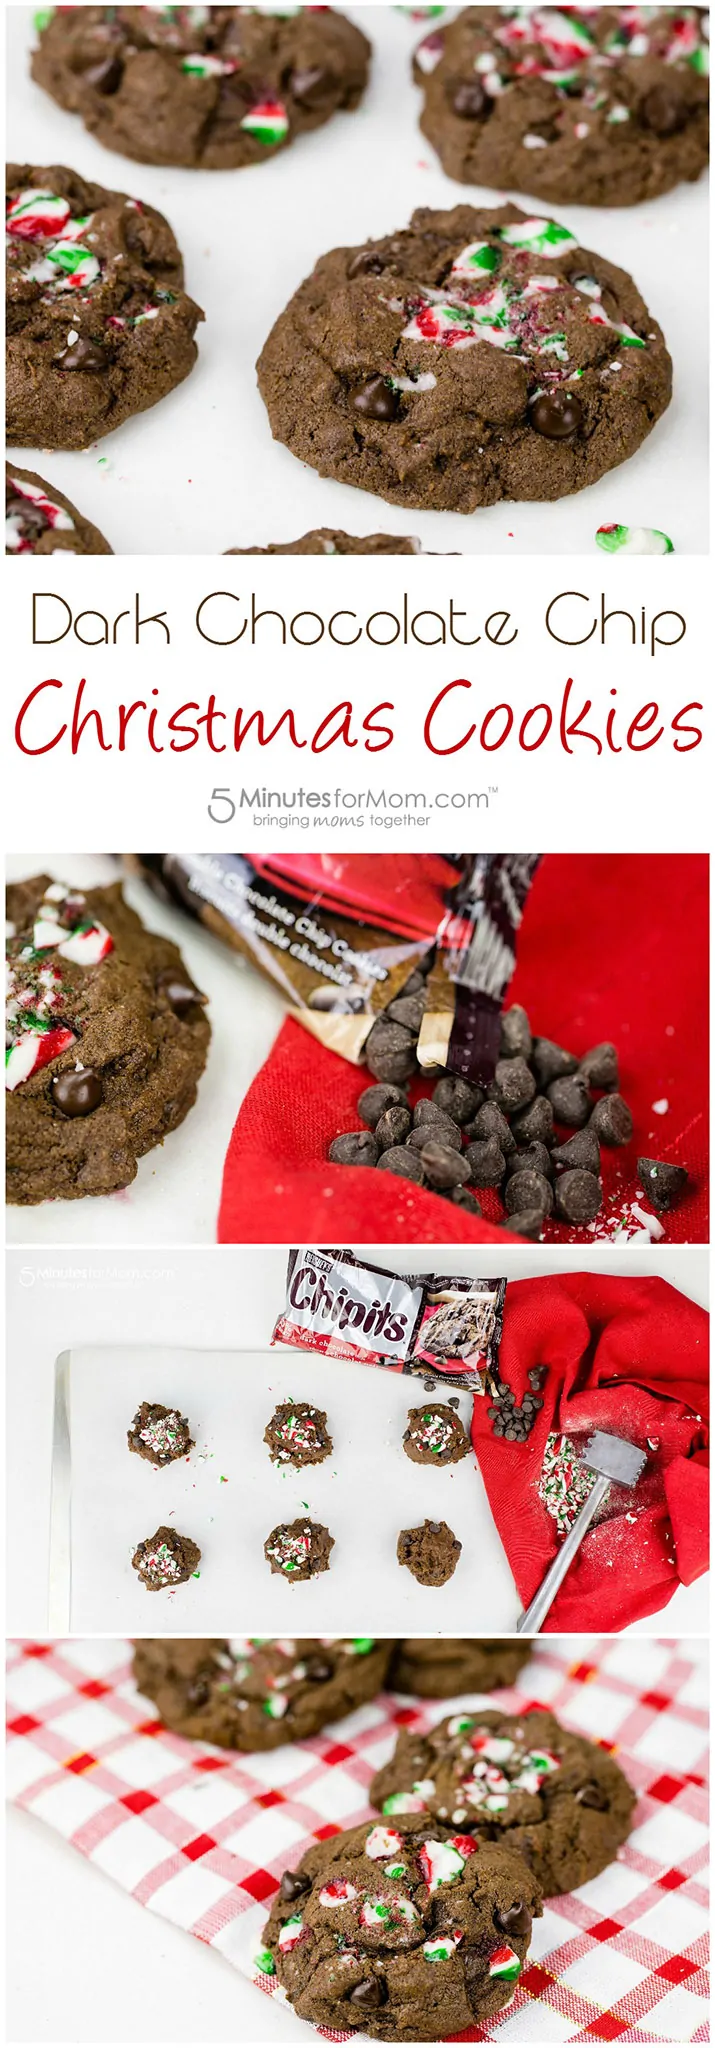 Dark Chocolate Chip Christmas Cookies Recipe